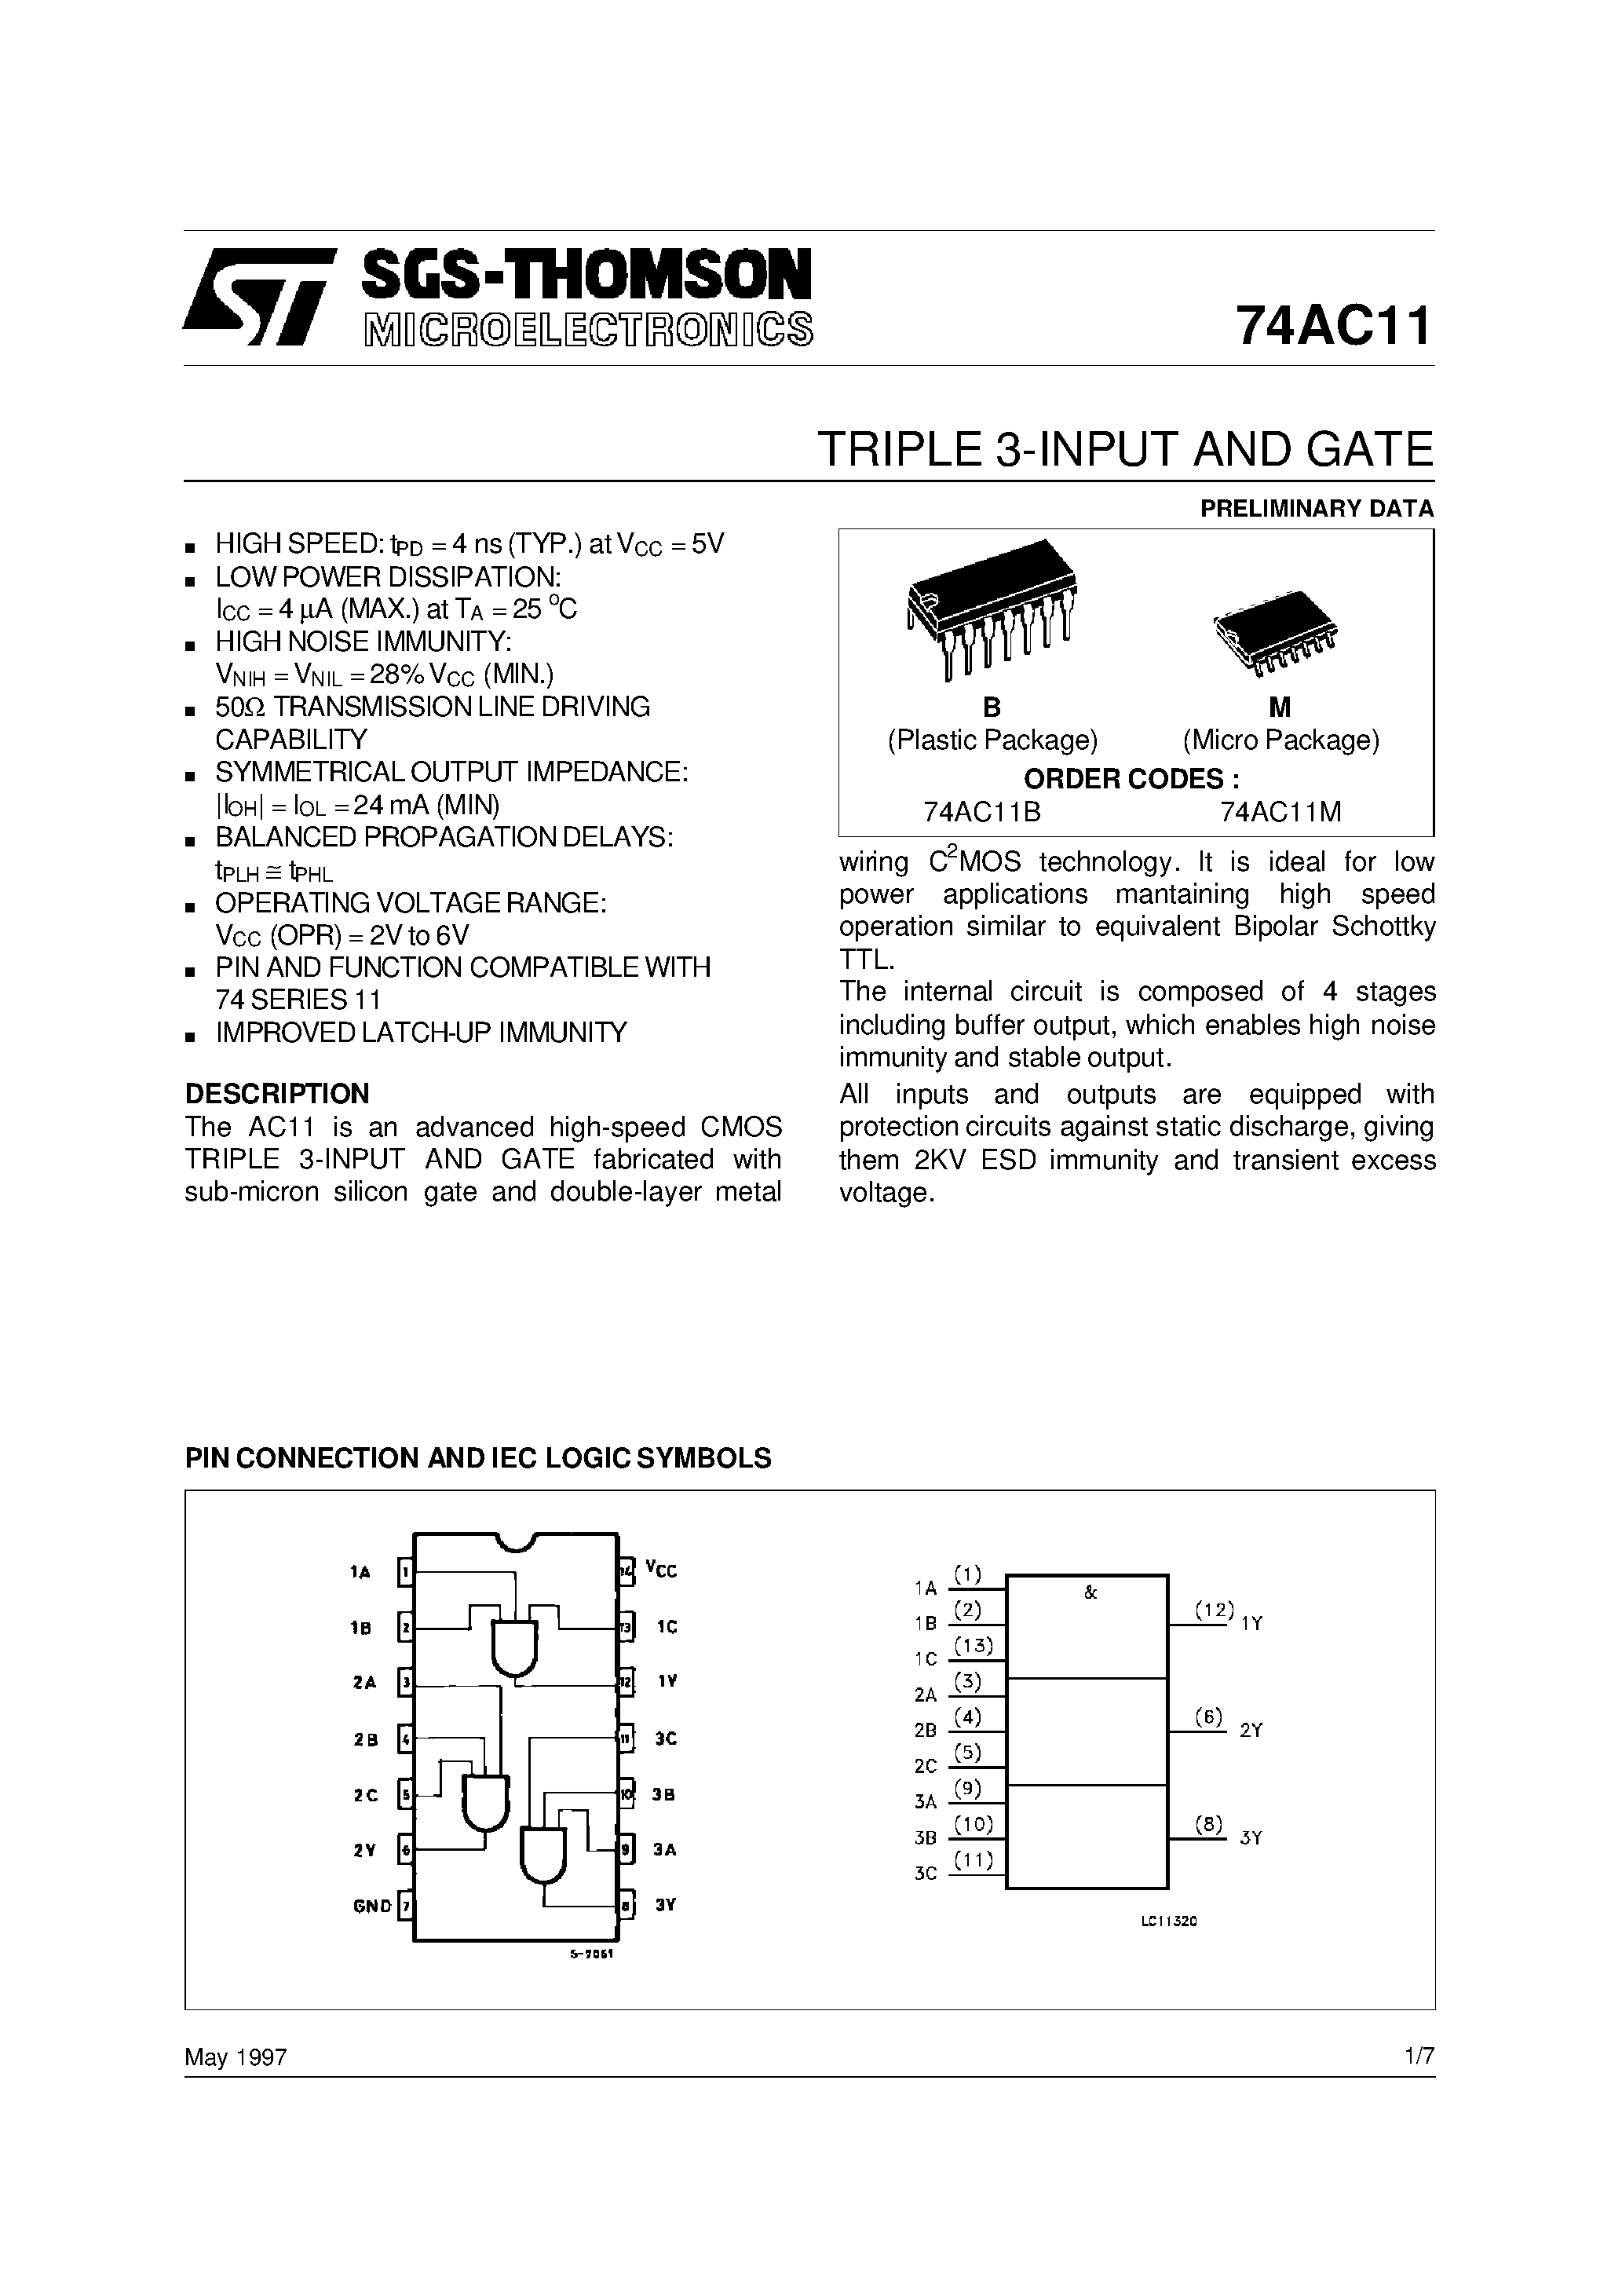 Datasheet 74AC11M - TRIPLE 3-INPUT AND GATE page 1